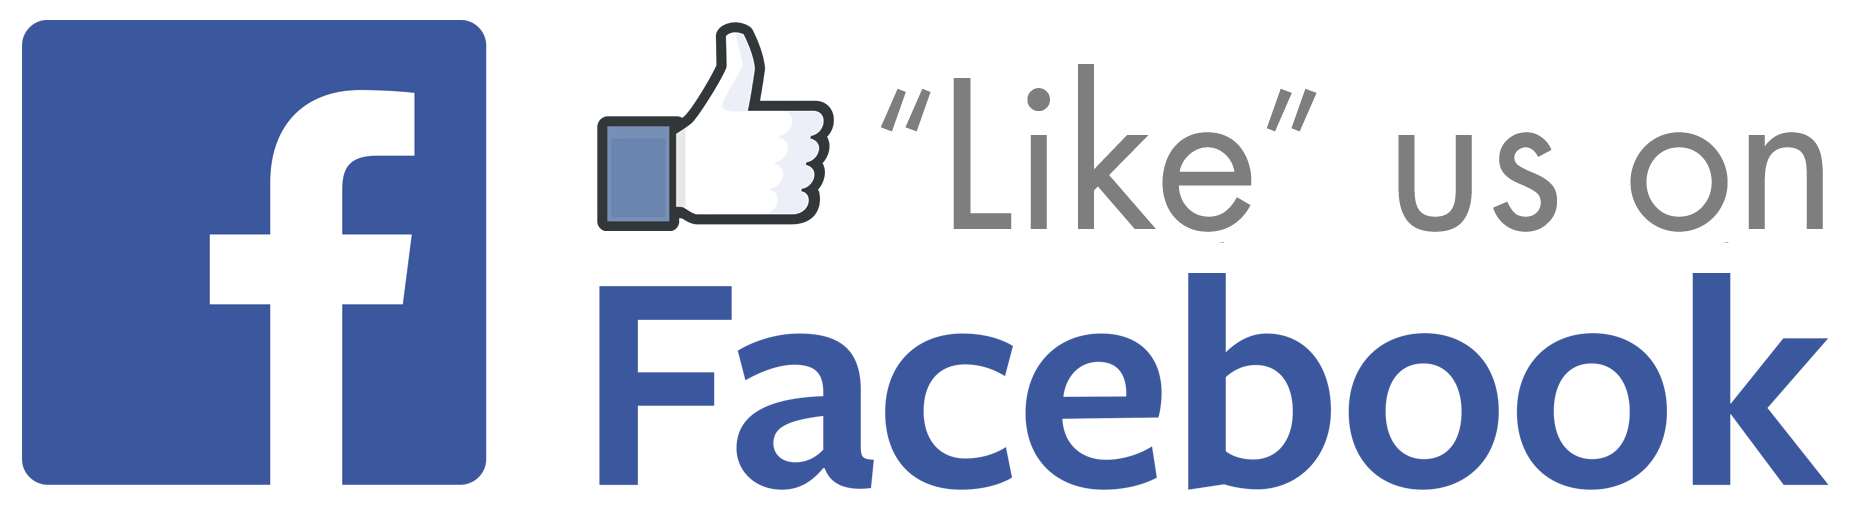 ✋ Facebook Com Like Us Button urbiakende like-us-on-facebook-logo_51269